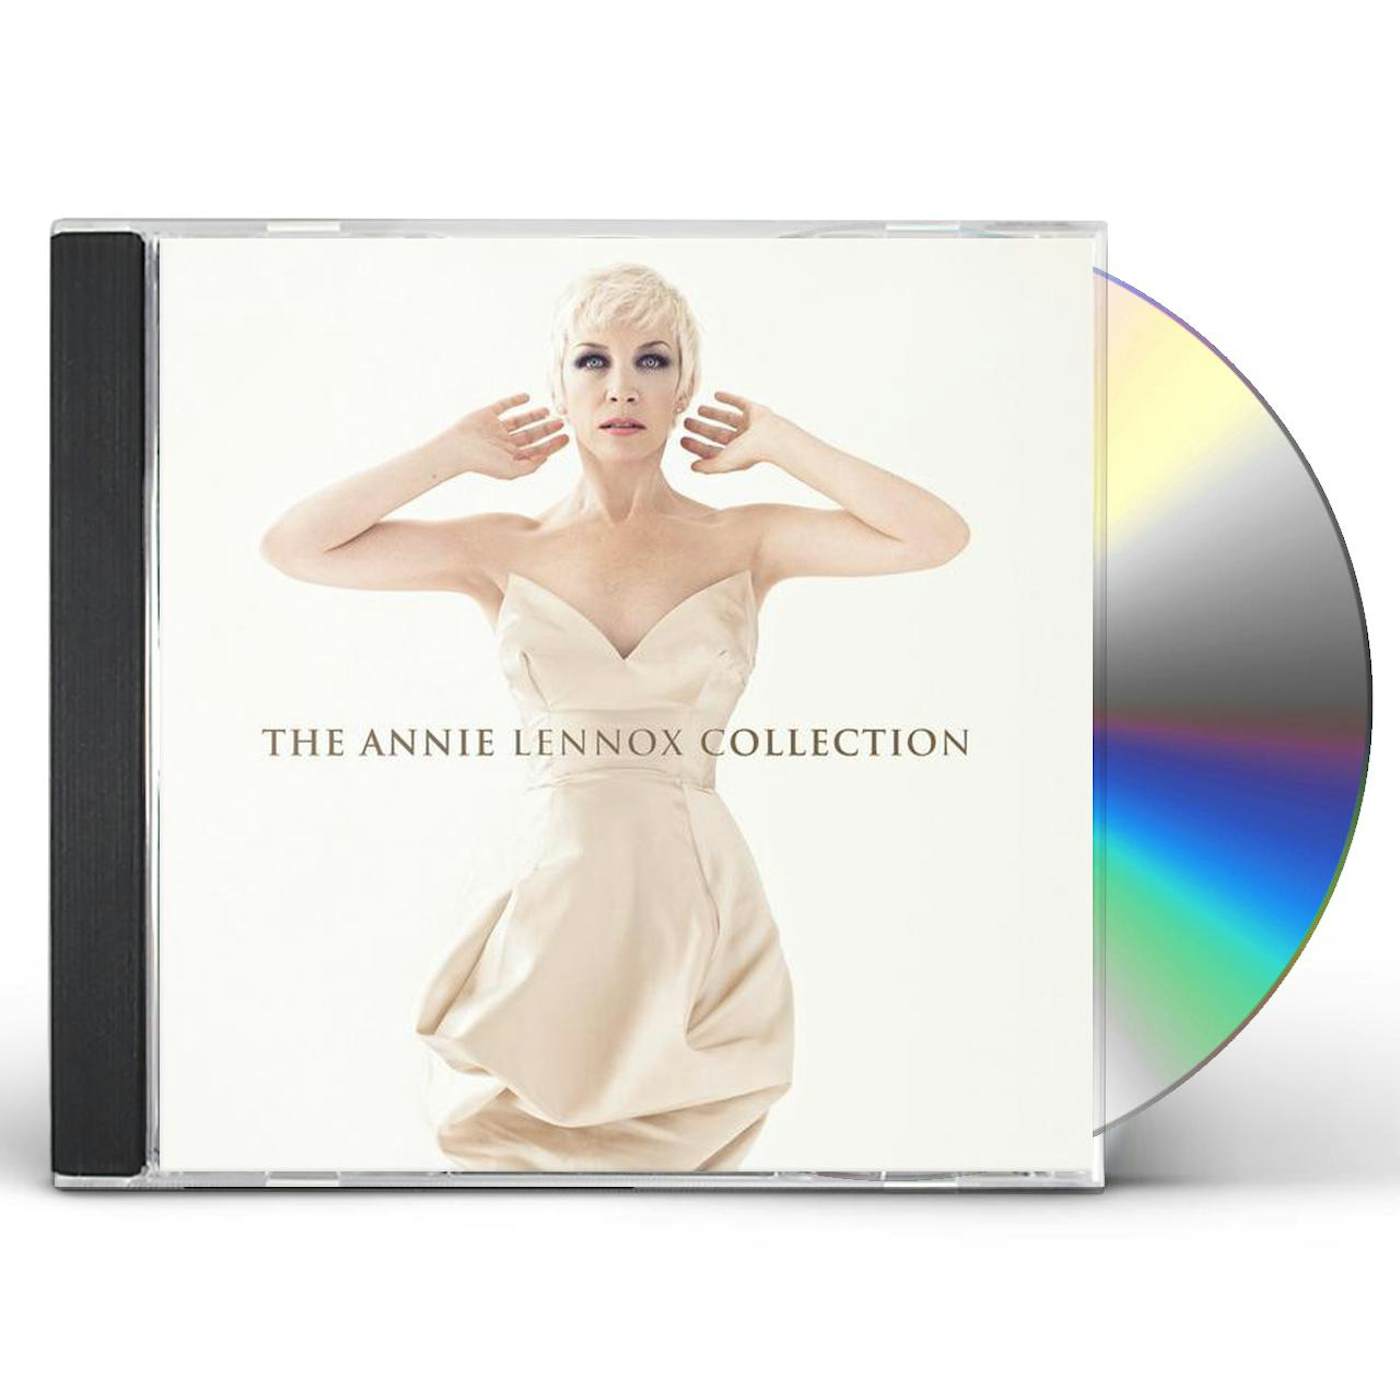 ANNIE LENNOX COLLECTION CD